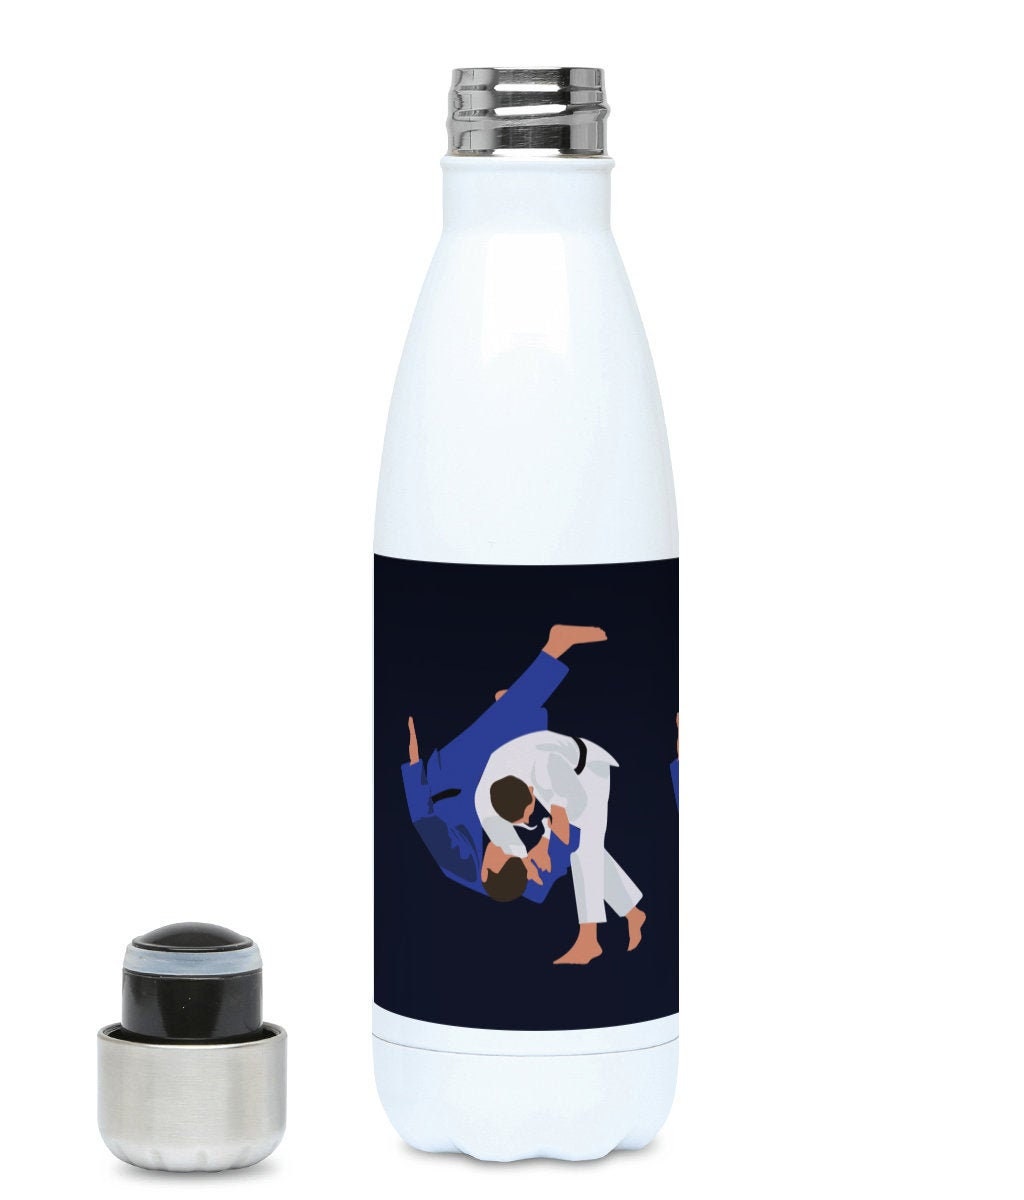 Men's blue judo insulated bottle "Le judoka" - Customizable